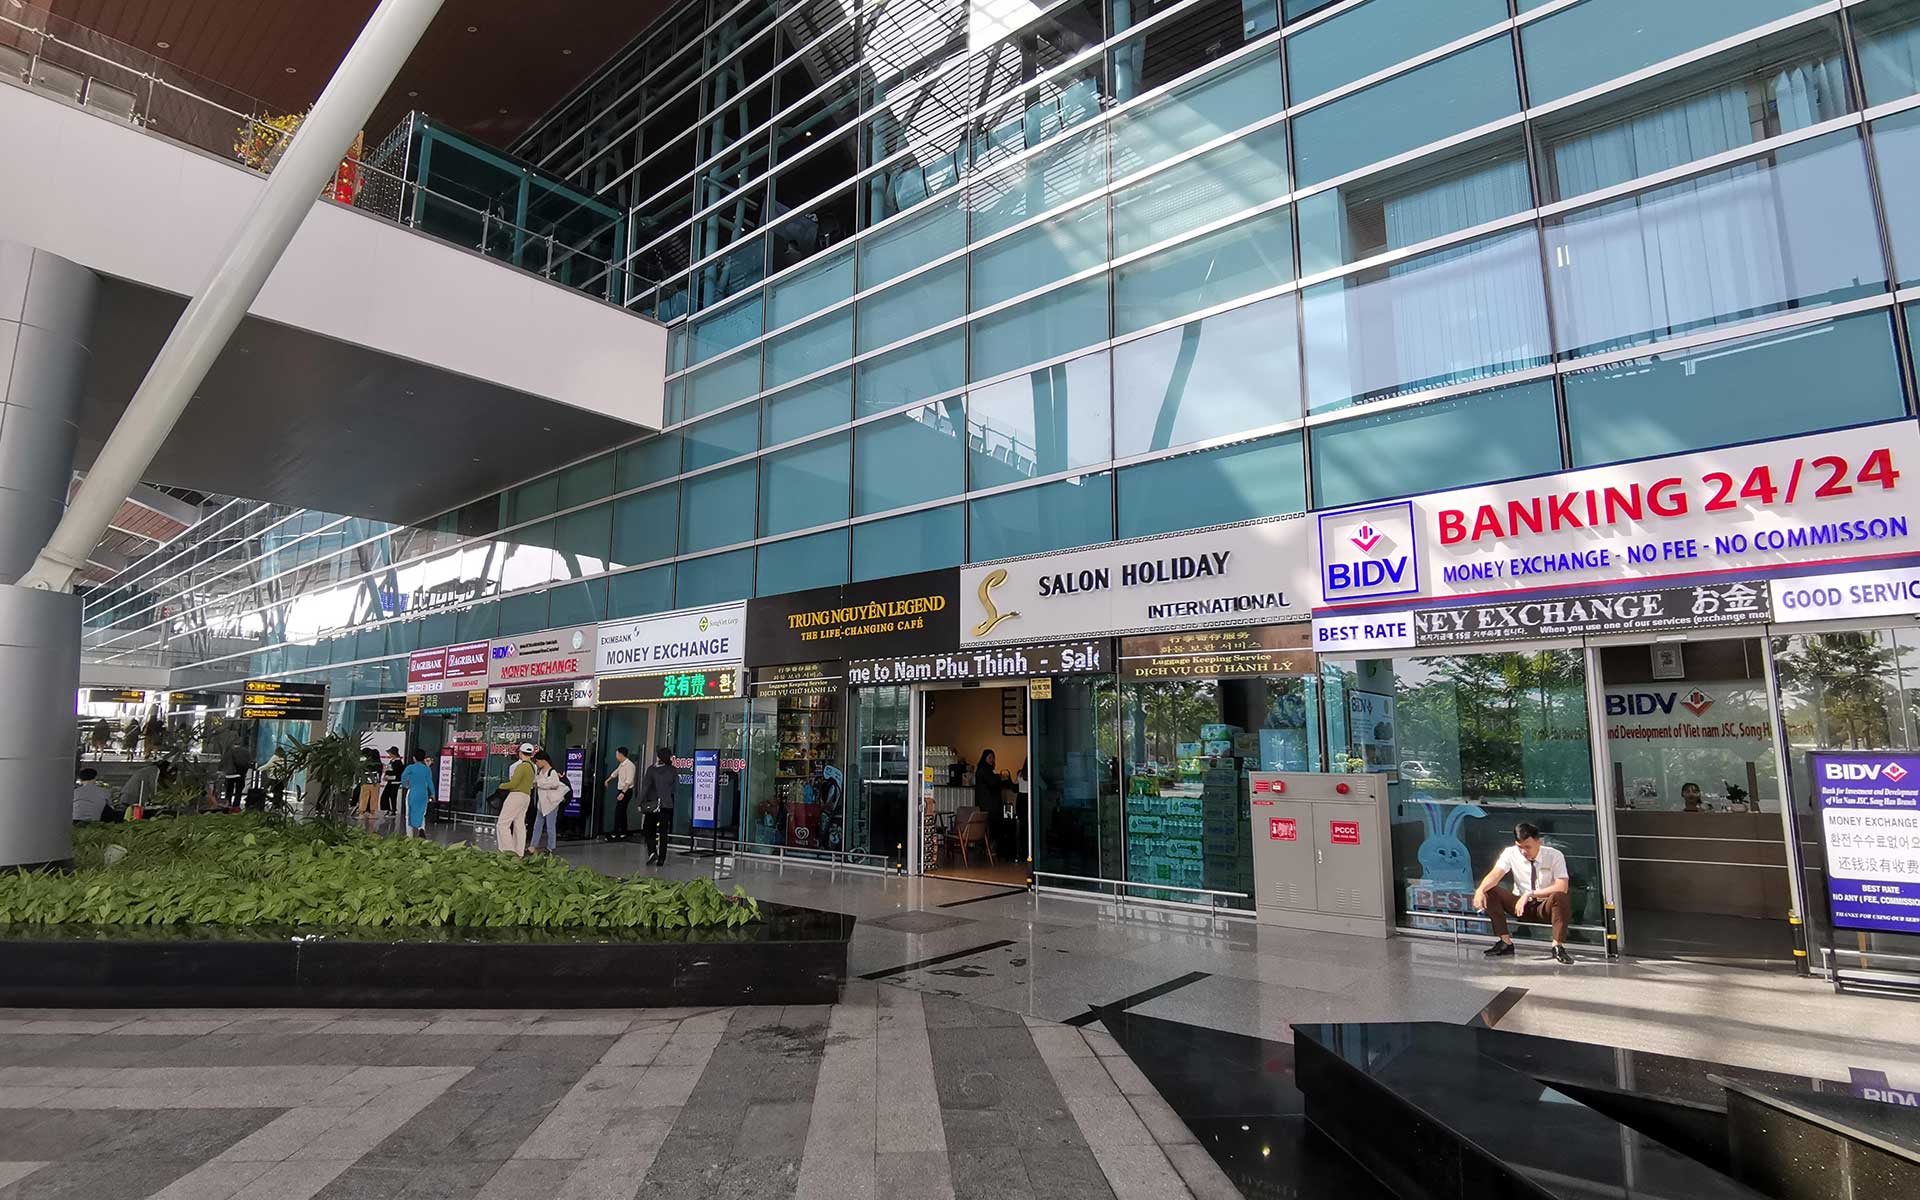 Money exchange counter and ATM of BIDV Bank at Danang International Airport